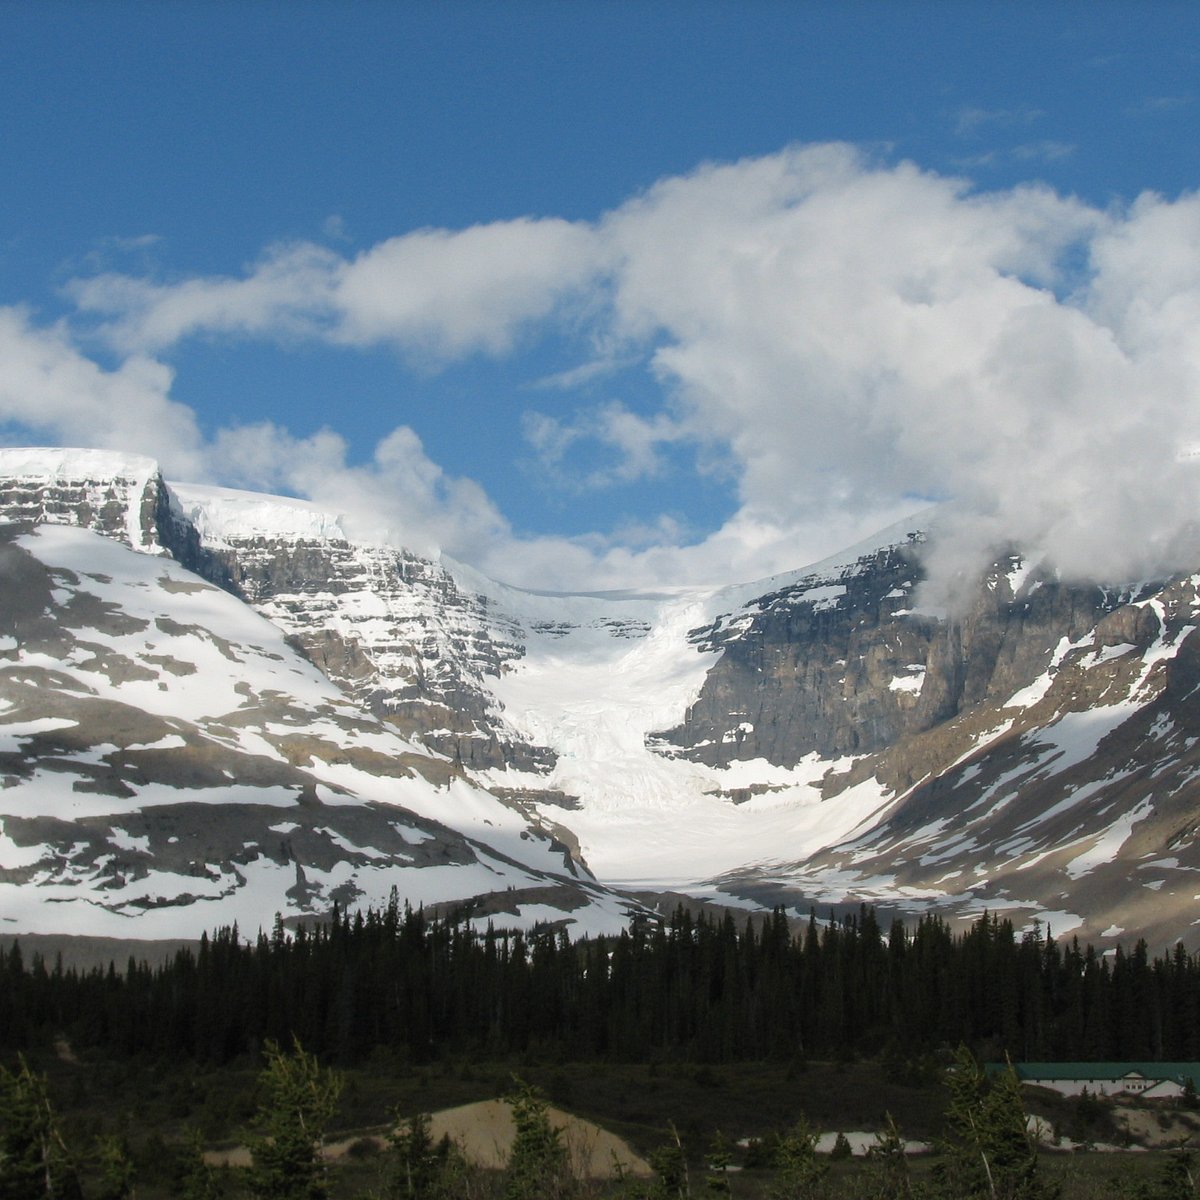 https://dynamic-media-cdn.tripadvisor.com/media/photo-o/01/83/e5/cb/athabasca-glacier.jpg?w=1200&h=1200&s=1